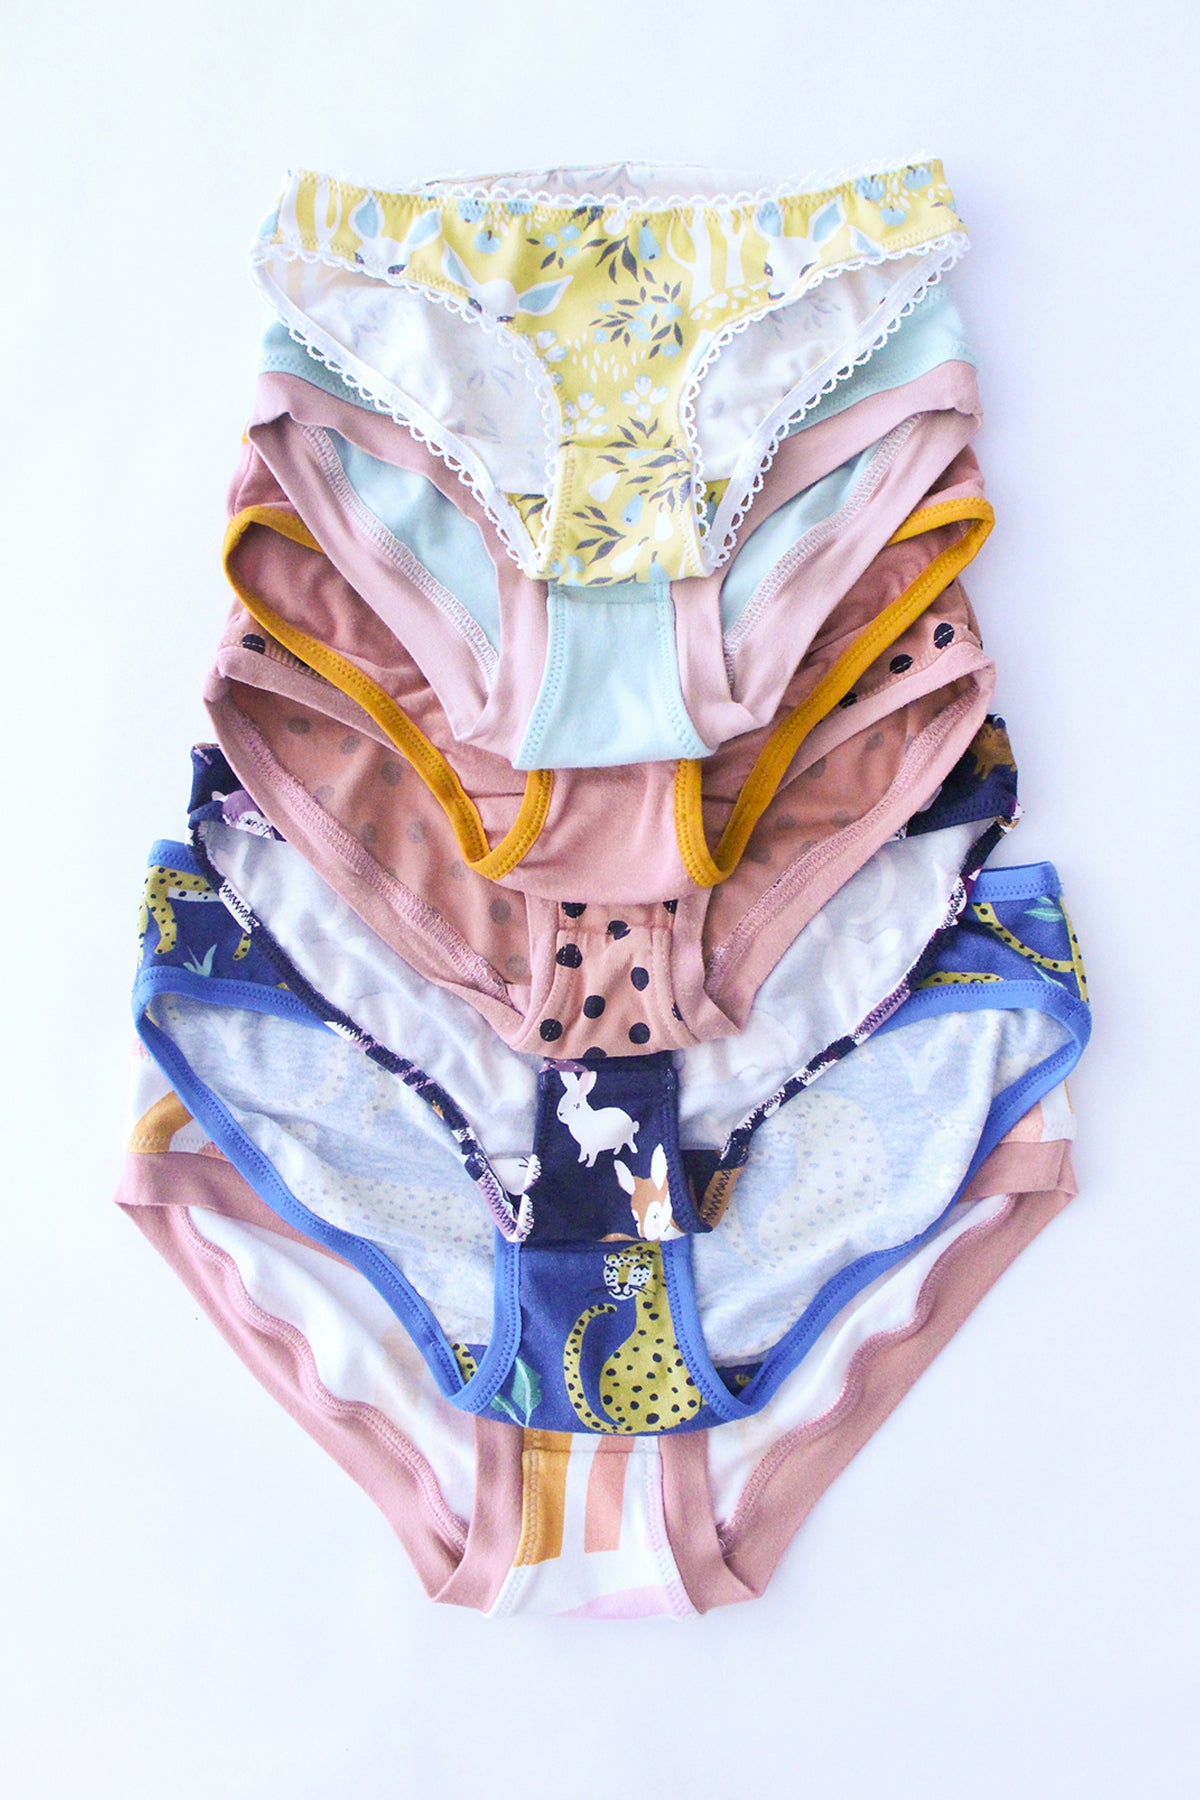 Mini Acacia Underwear Sewing Pattern